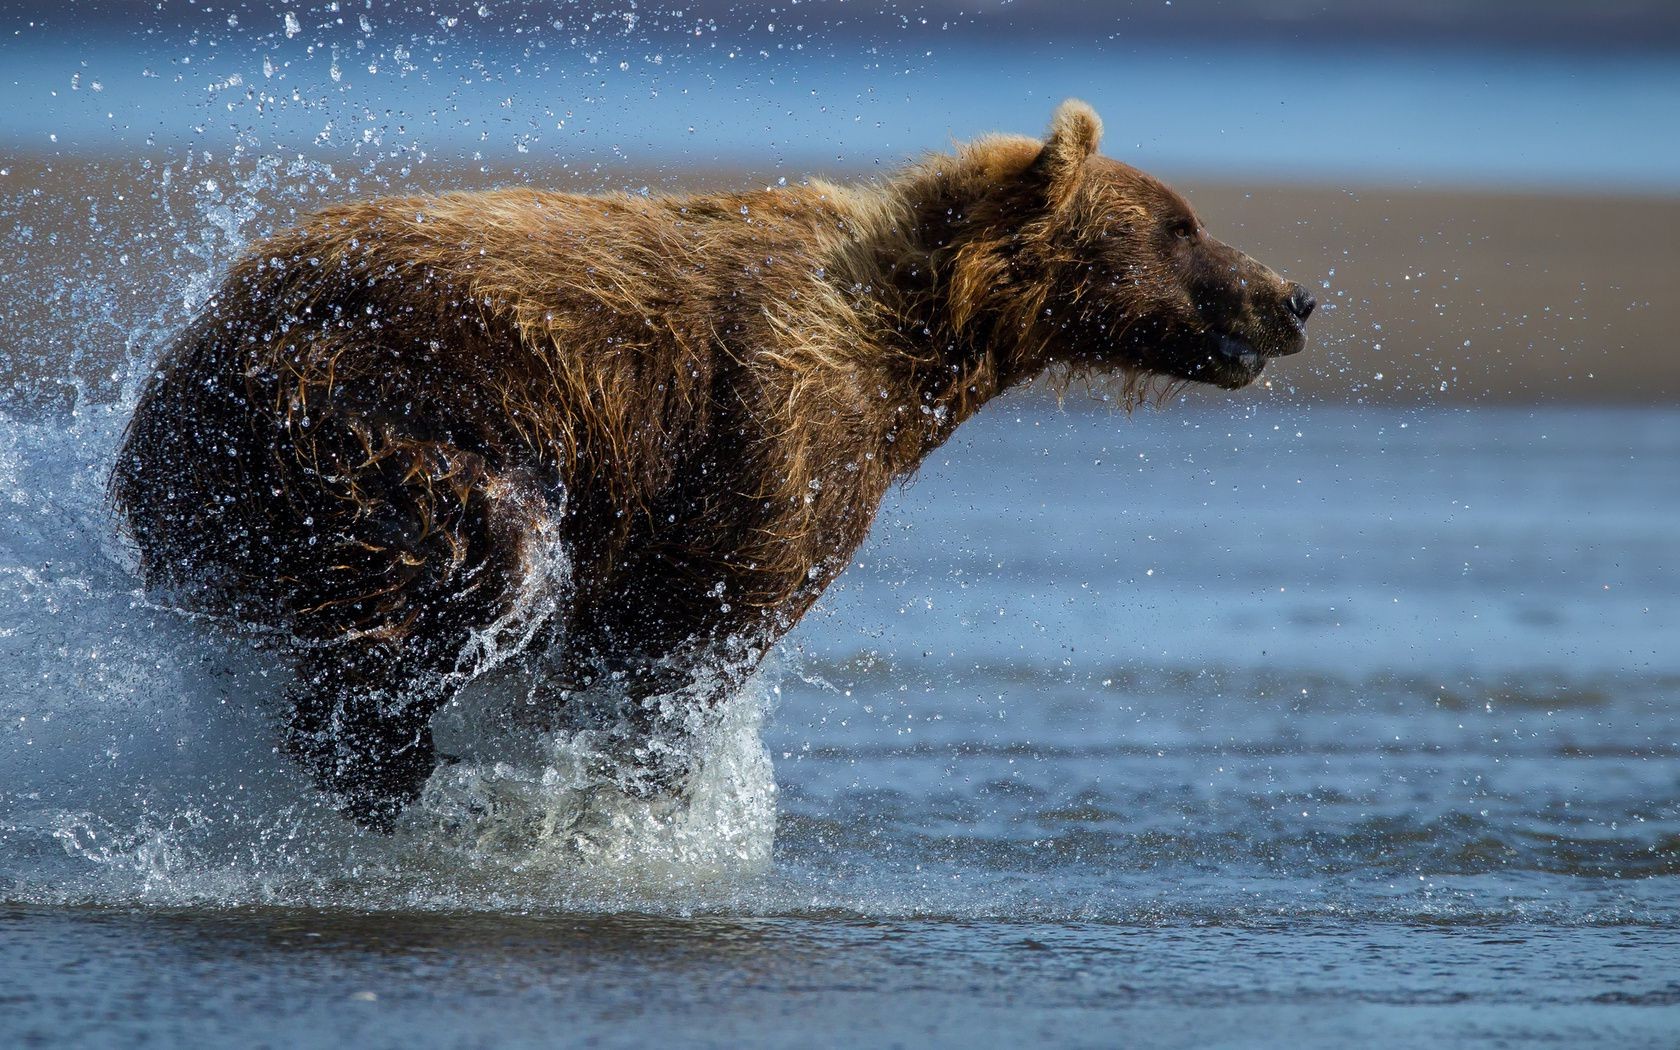 bears water mammal motion outdoors action splash winter surf wet wildlife daylight cold one seashore ocean snow